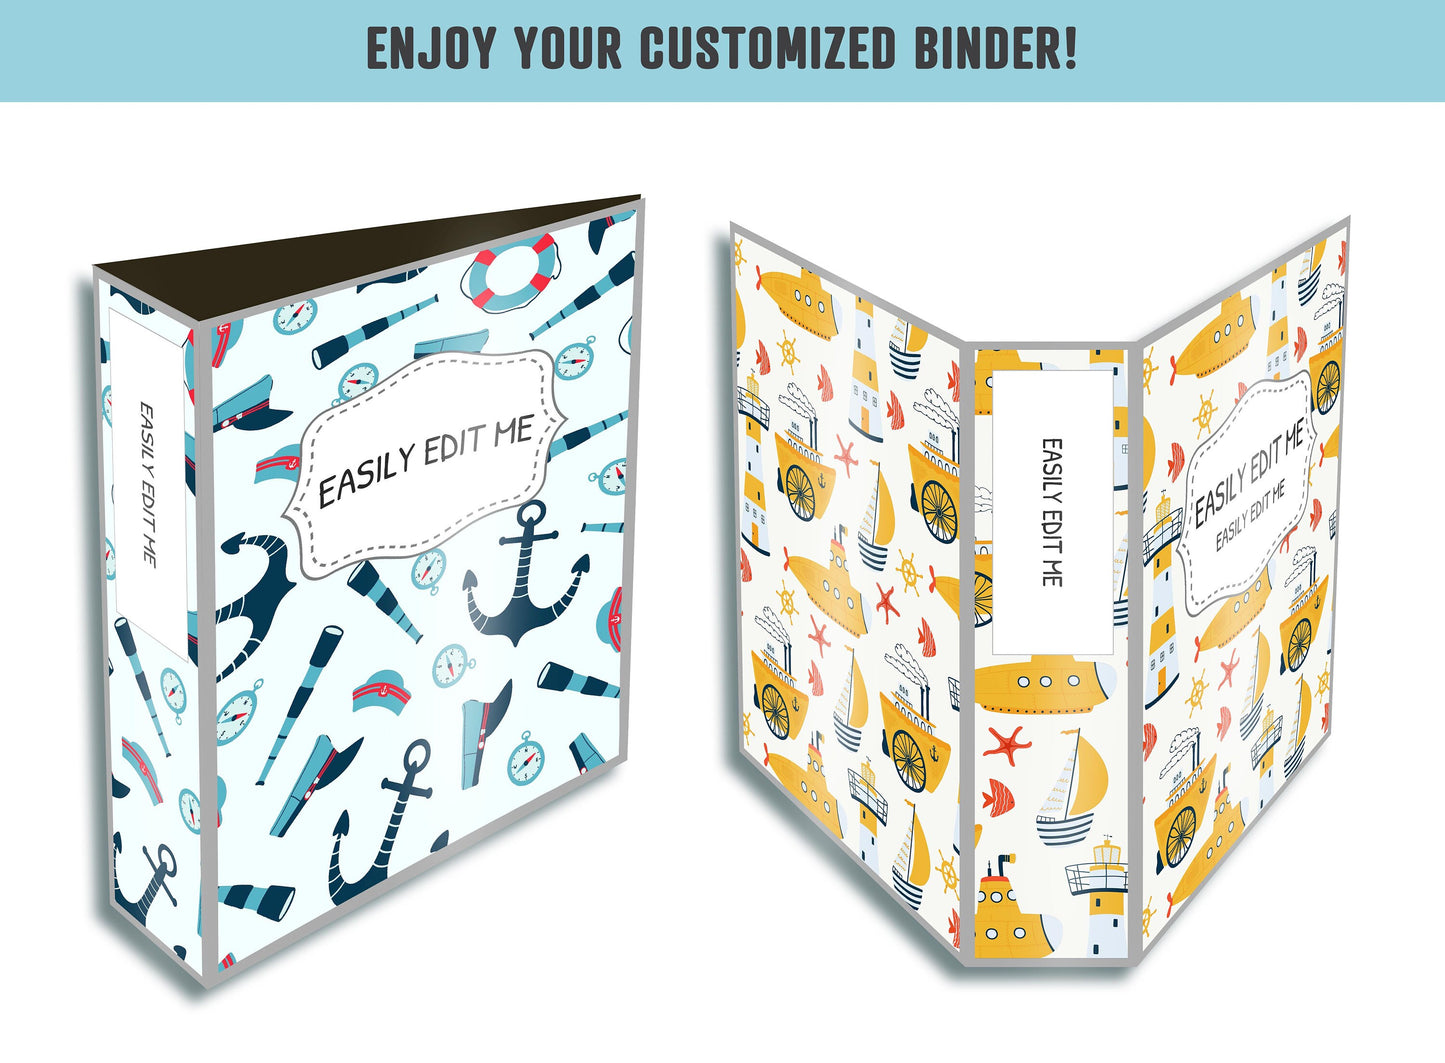 Ocean Binder Cover, 10 Printable/Editable Covers+Spines, Planner Cover Teacher/School Binder Insert/Template, Anchor, Sea, Ship Wheel Cruise